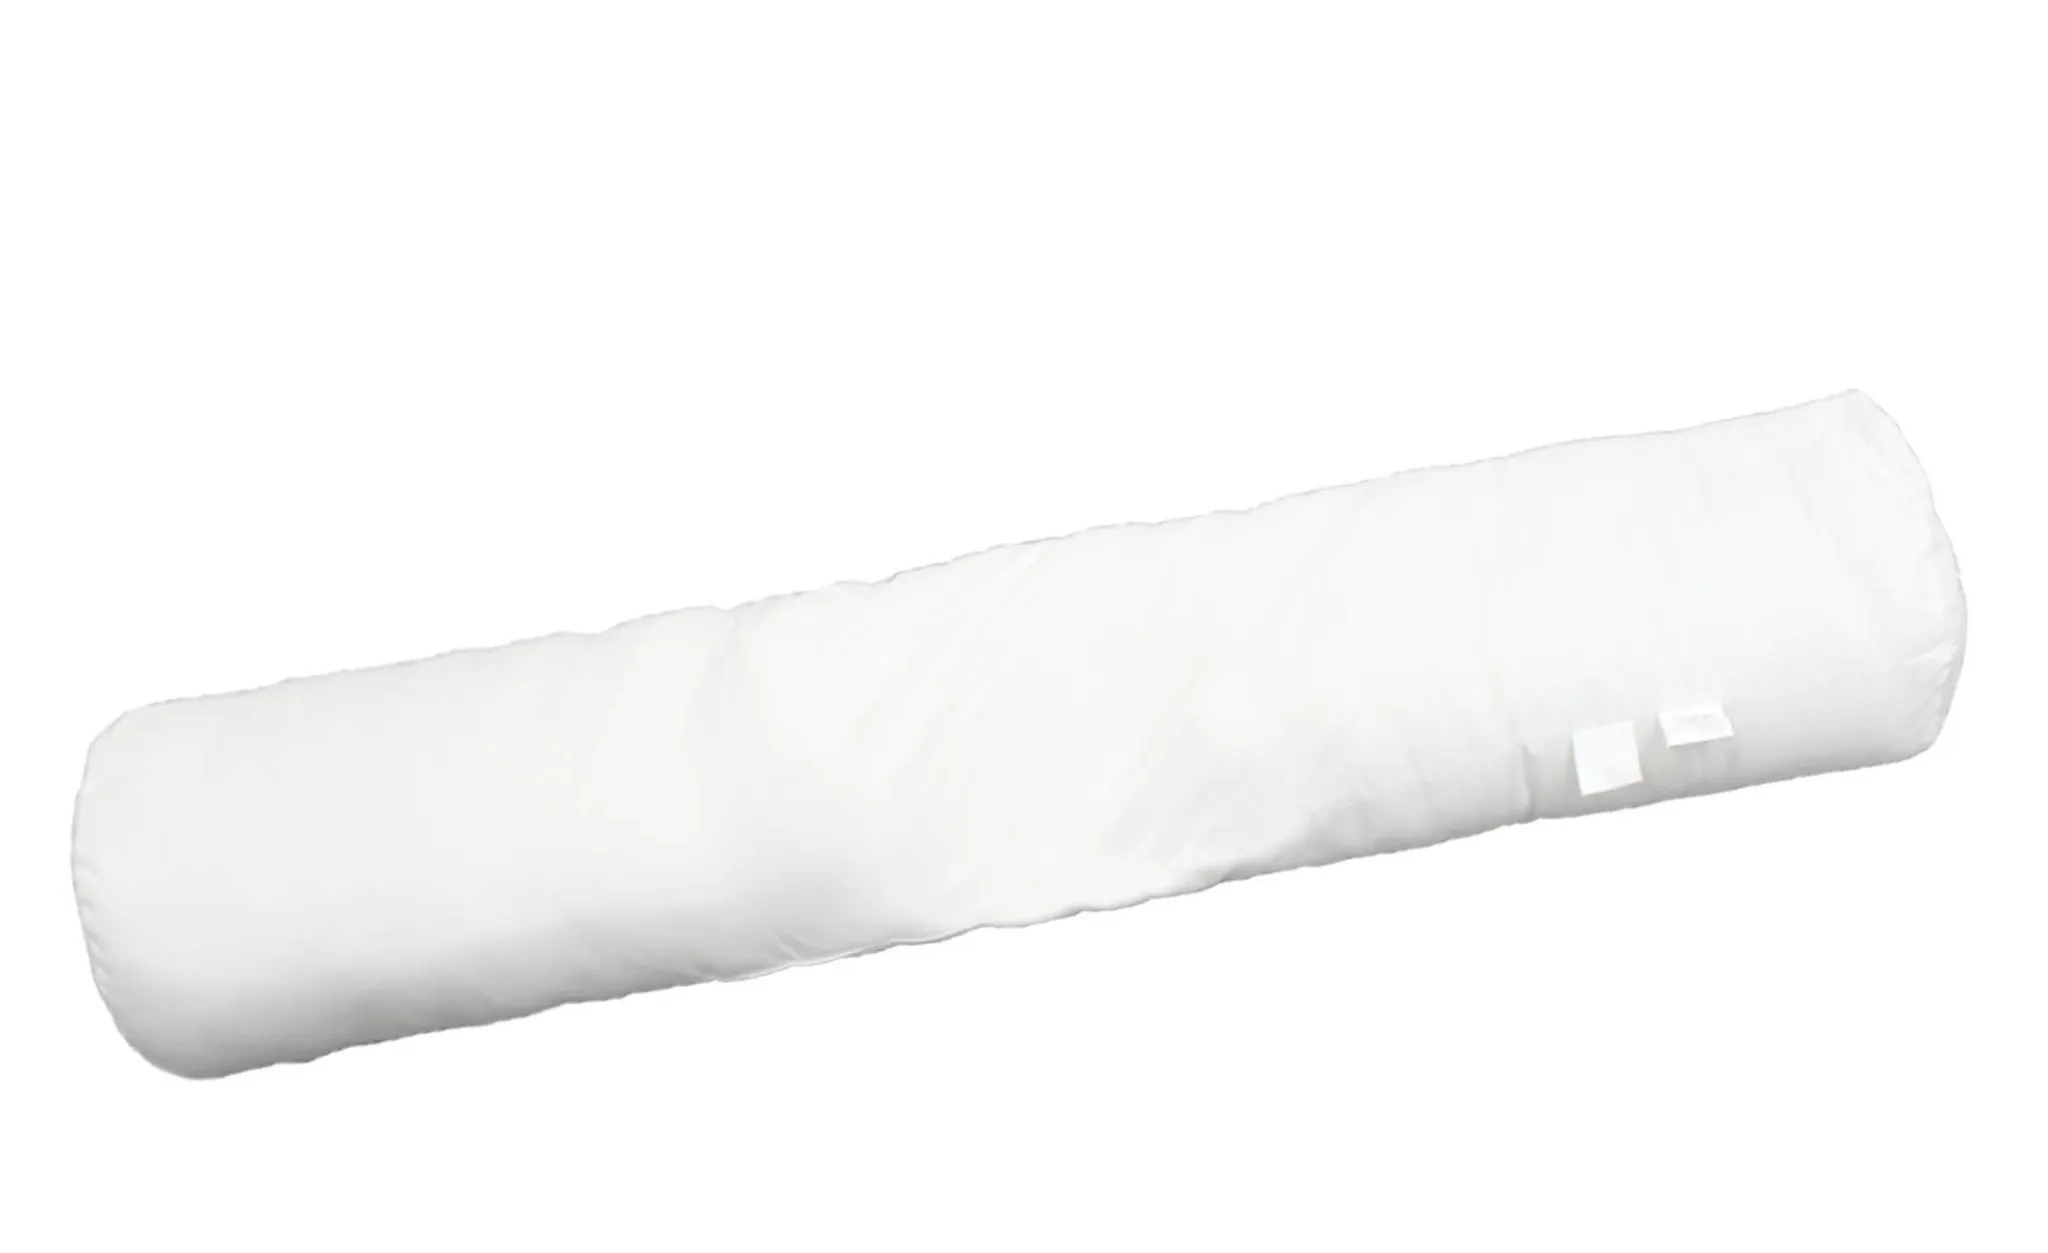 Nackenrolle ohne Bezug, 60 cm lang x Ø 20 cm, weiss, 60°C waschbar